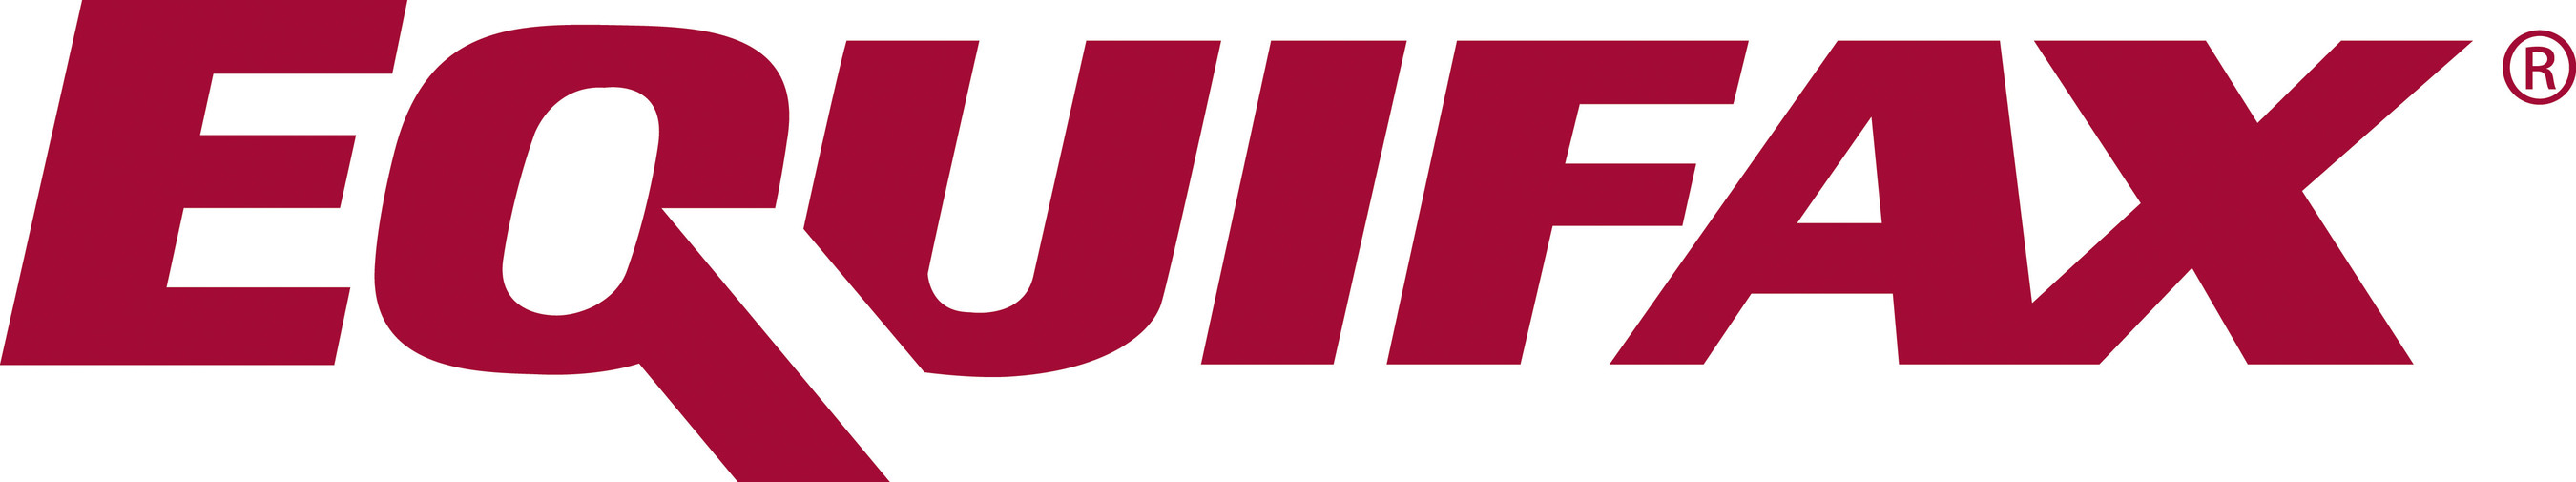 Equifax Inc. logo. (PRNewsFoto/Equifax Inc.)